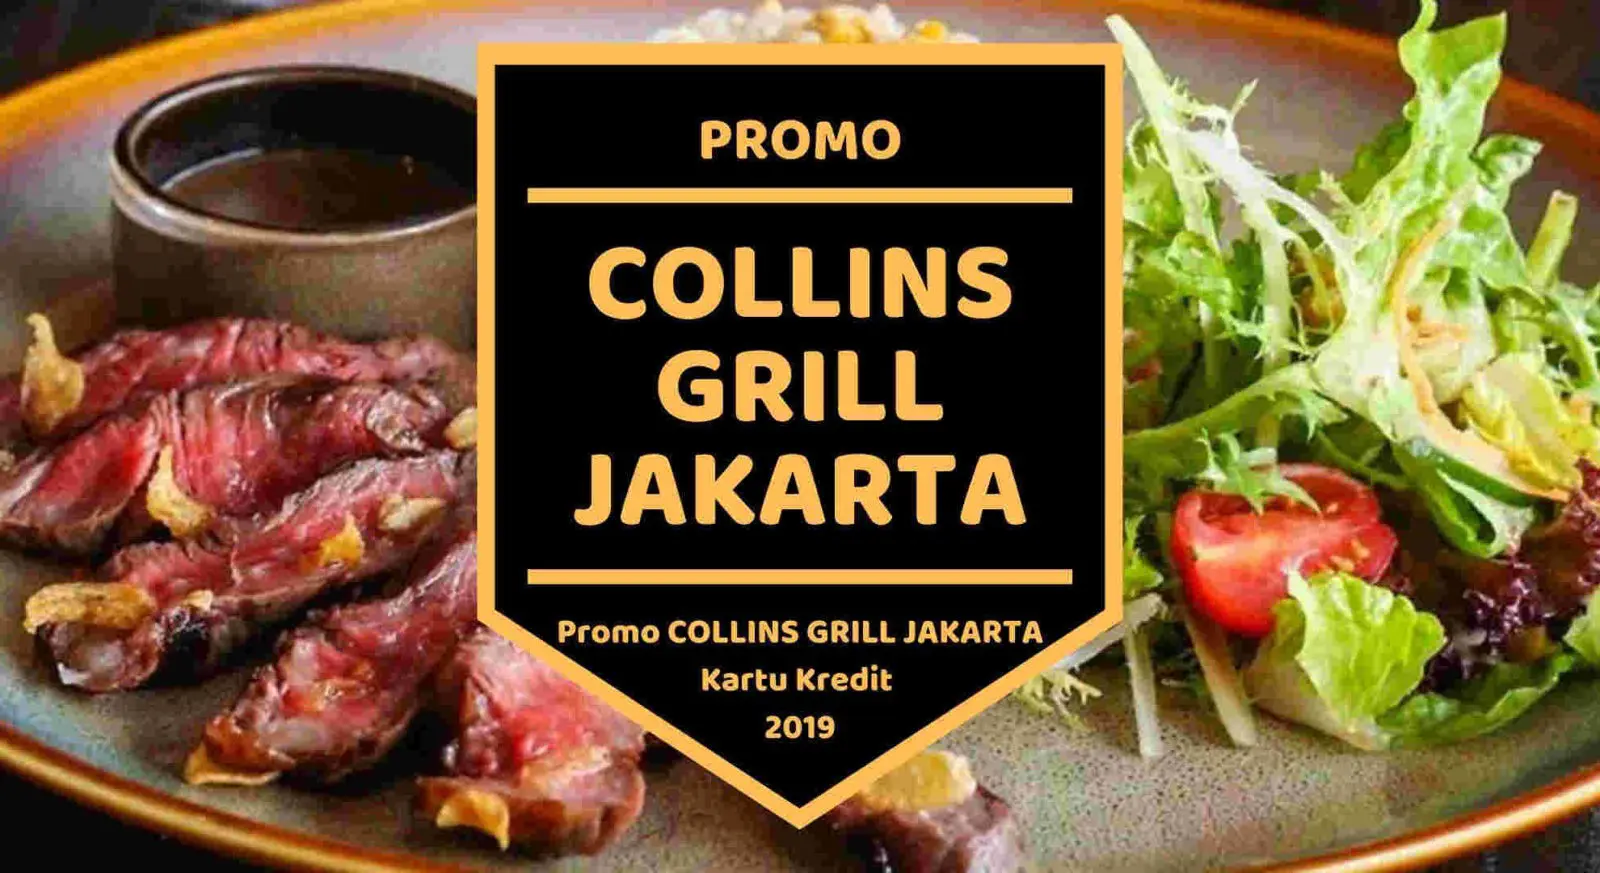 Promo Collins Grill Jakarta